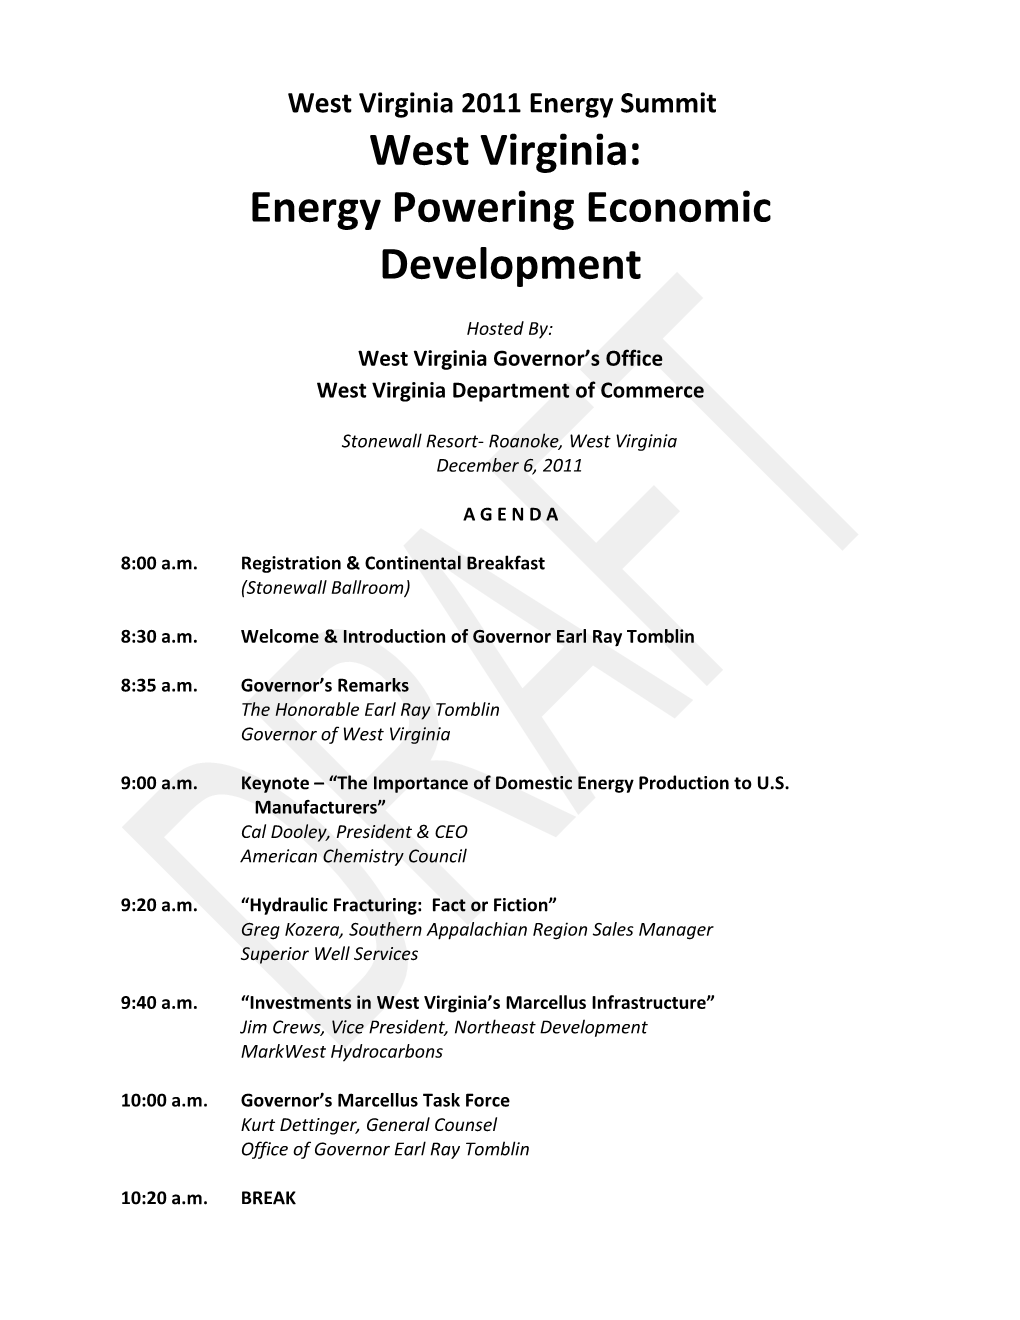 West Virginia 2008 Energy Summit